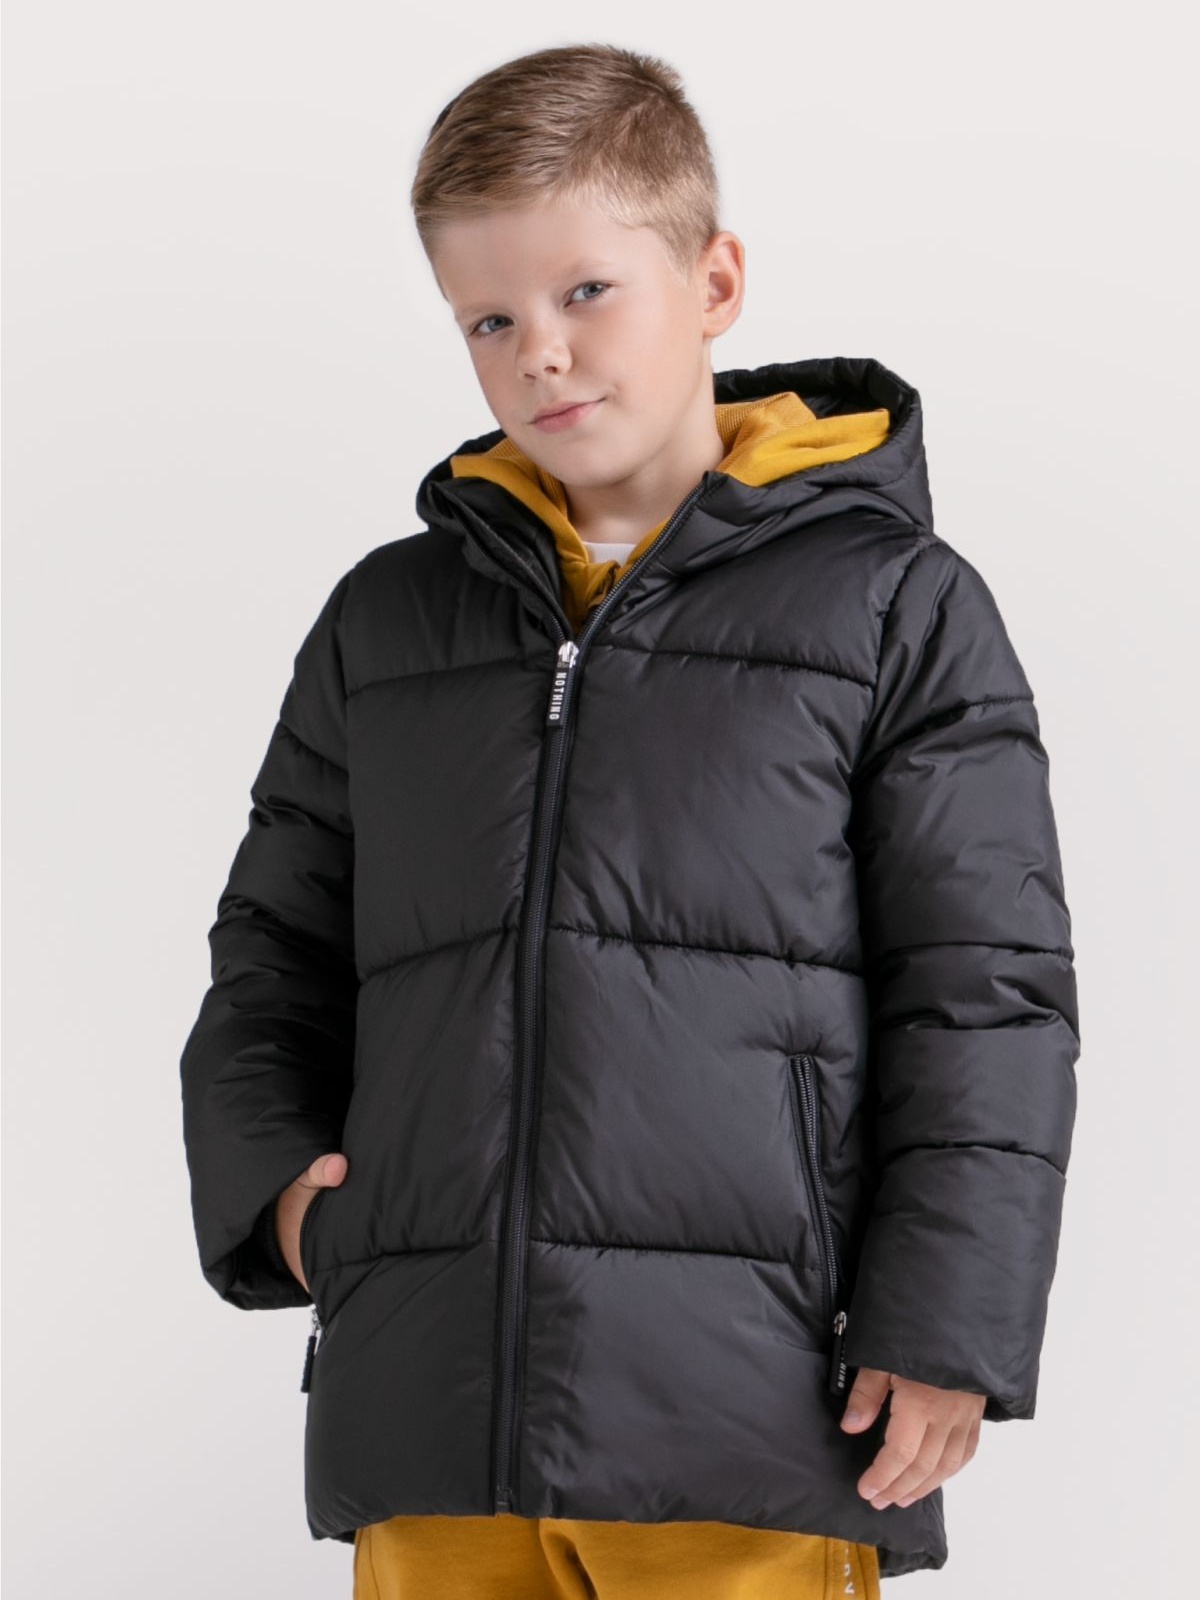 Акция на Дитяча зимова куртка для хлопчика Coccodrillo Outerwear Boy Kids ZC2152101OBK-021 92 см от Rozetka